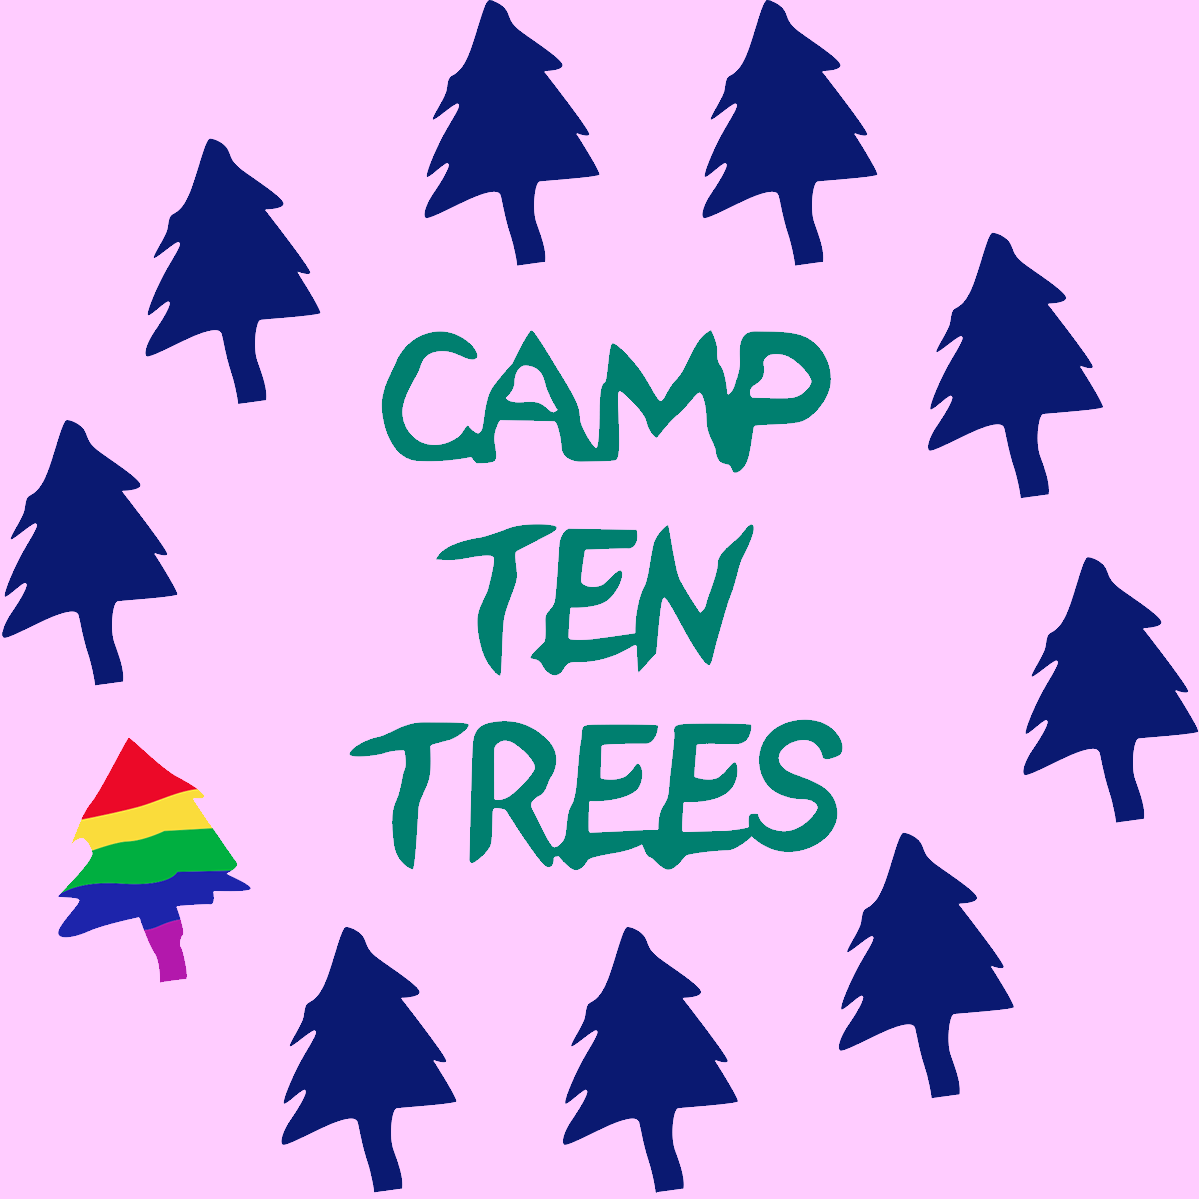 Camp Ten Trees